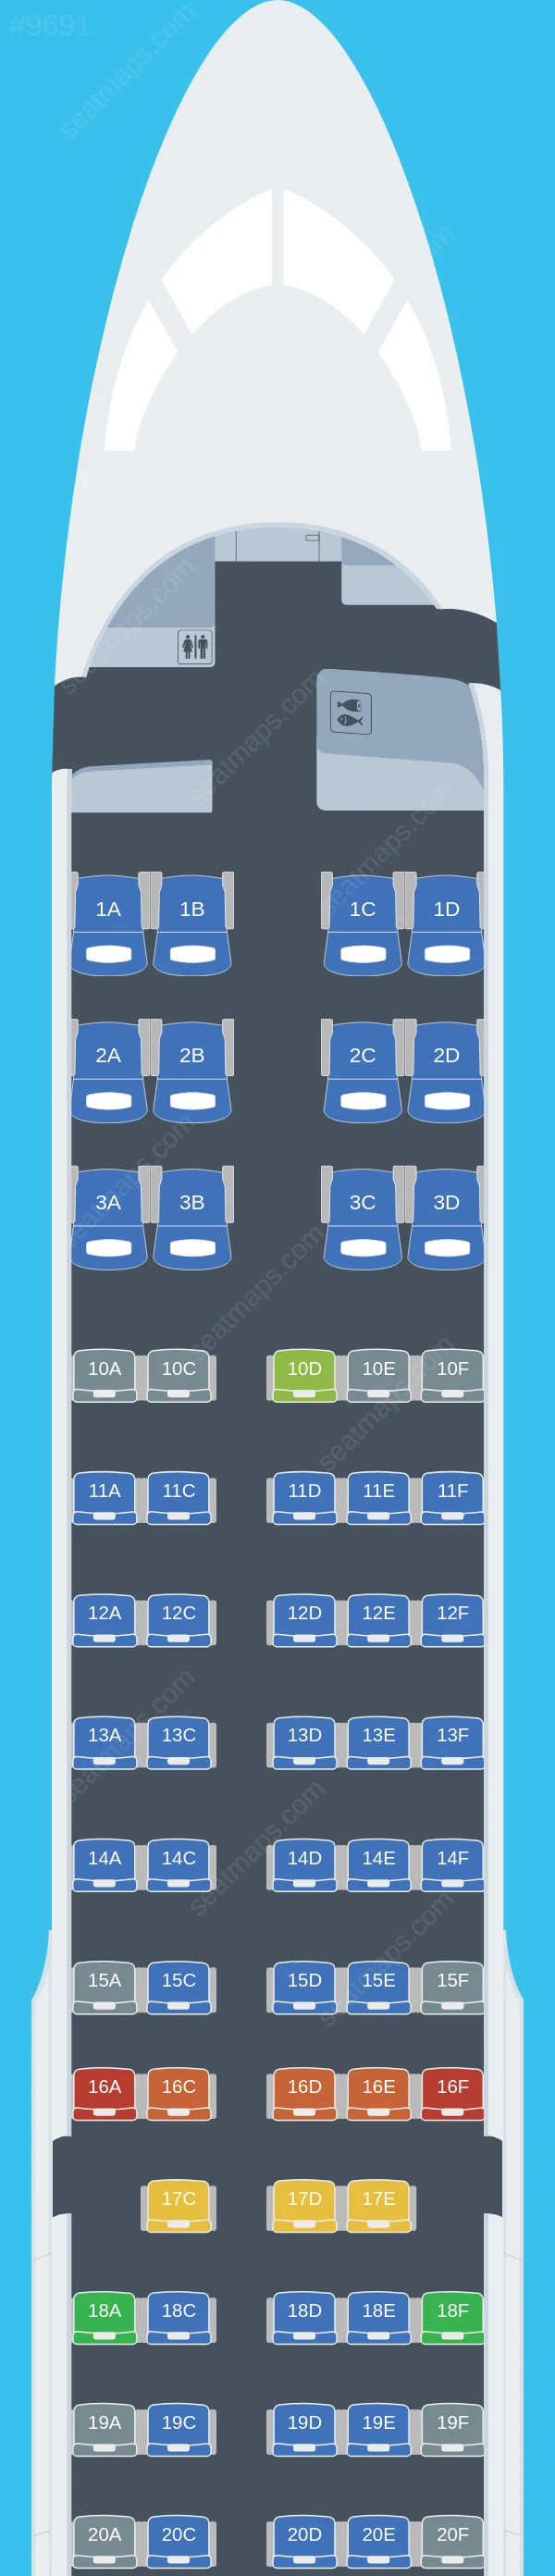 Delta Airbus A220-300 seatmap preview